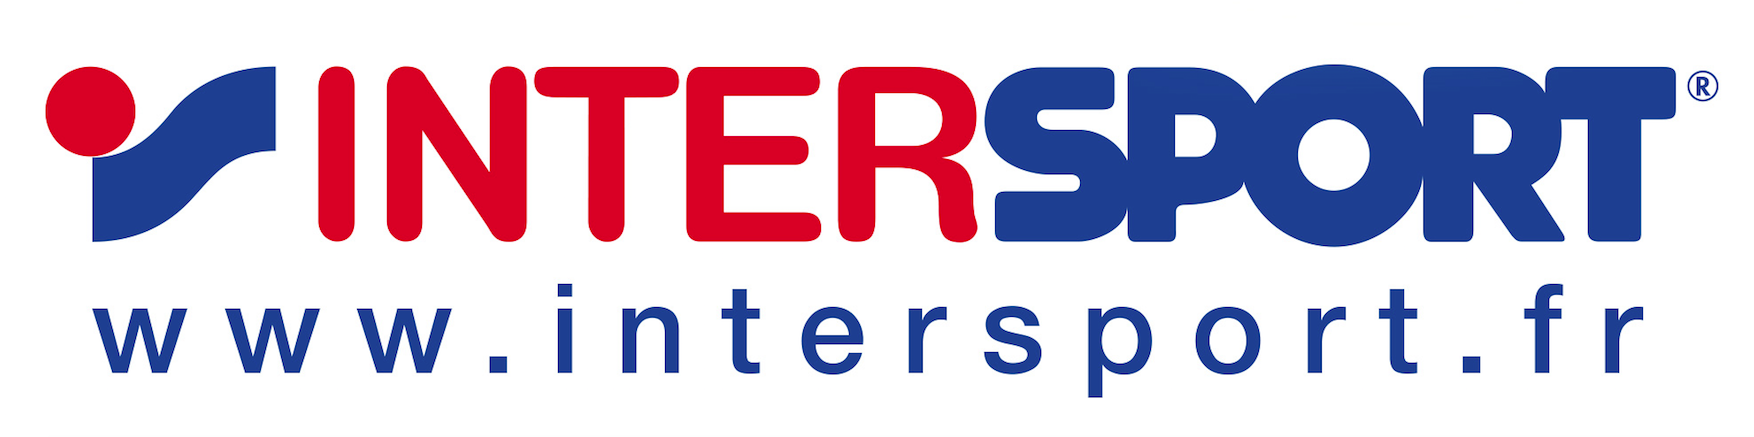 logo_intersport_2.png